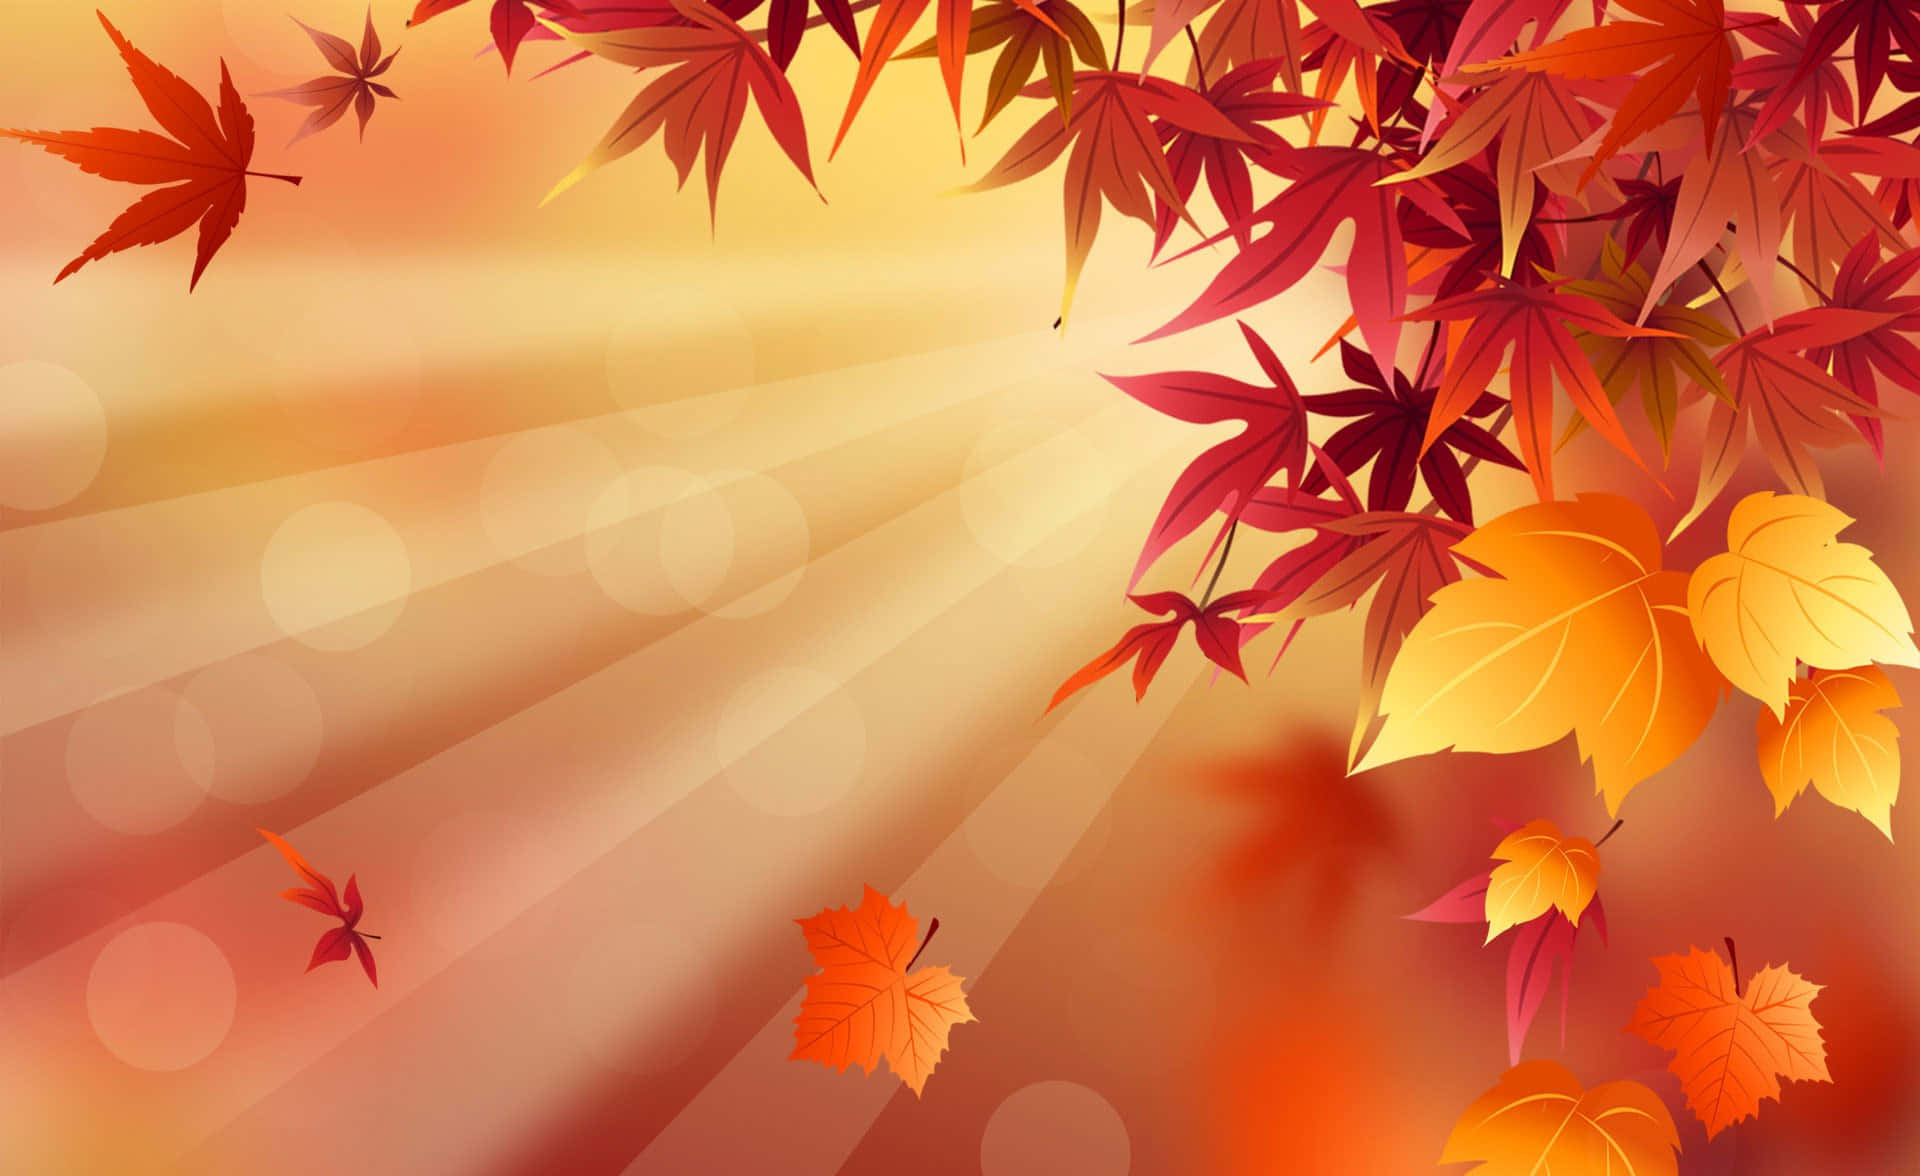 Autumn Season Falling Leaves Digital Art